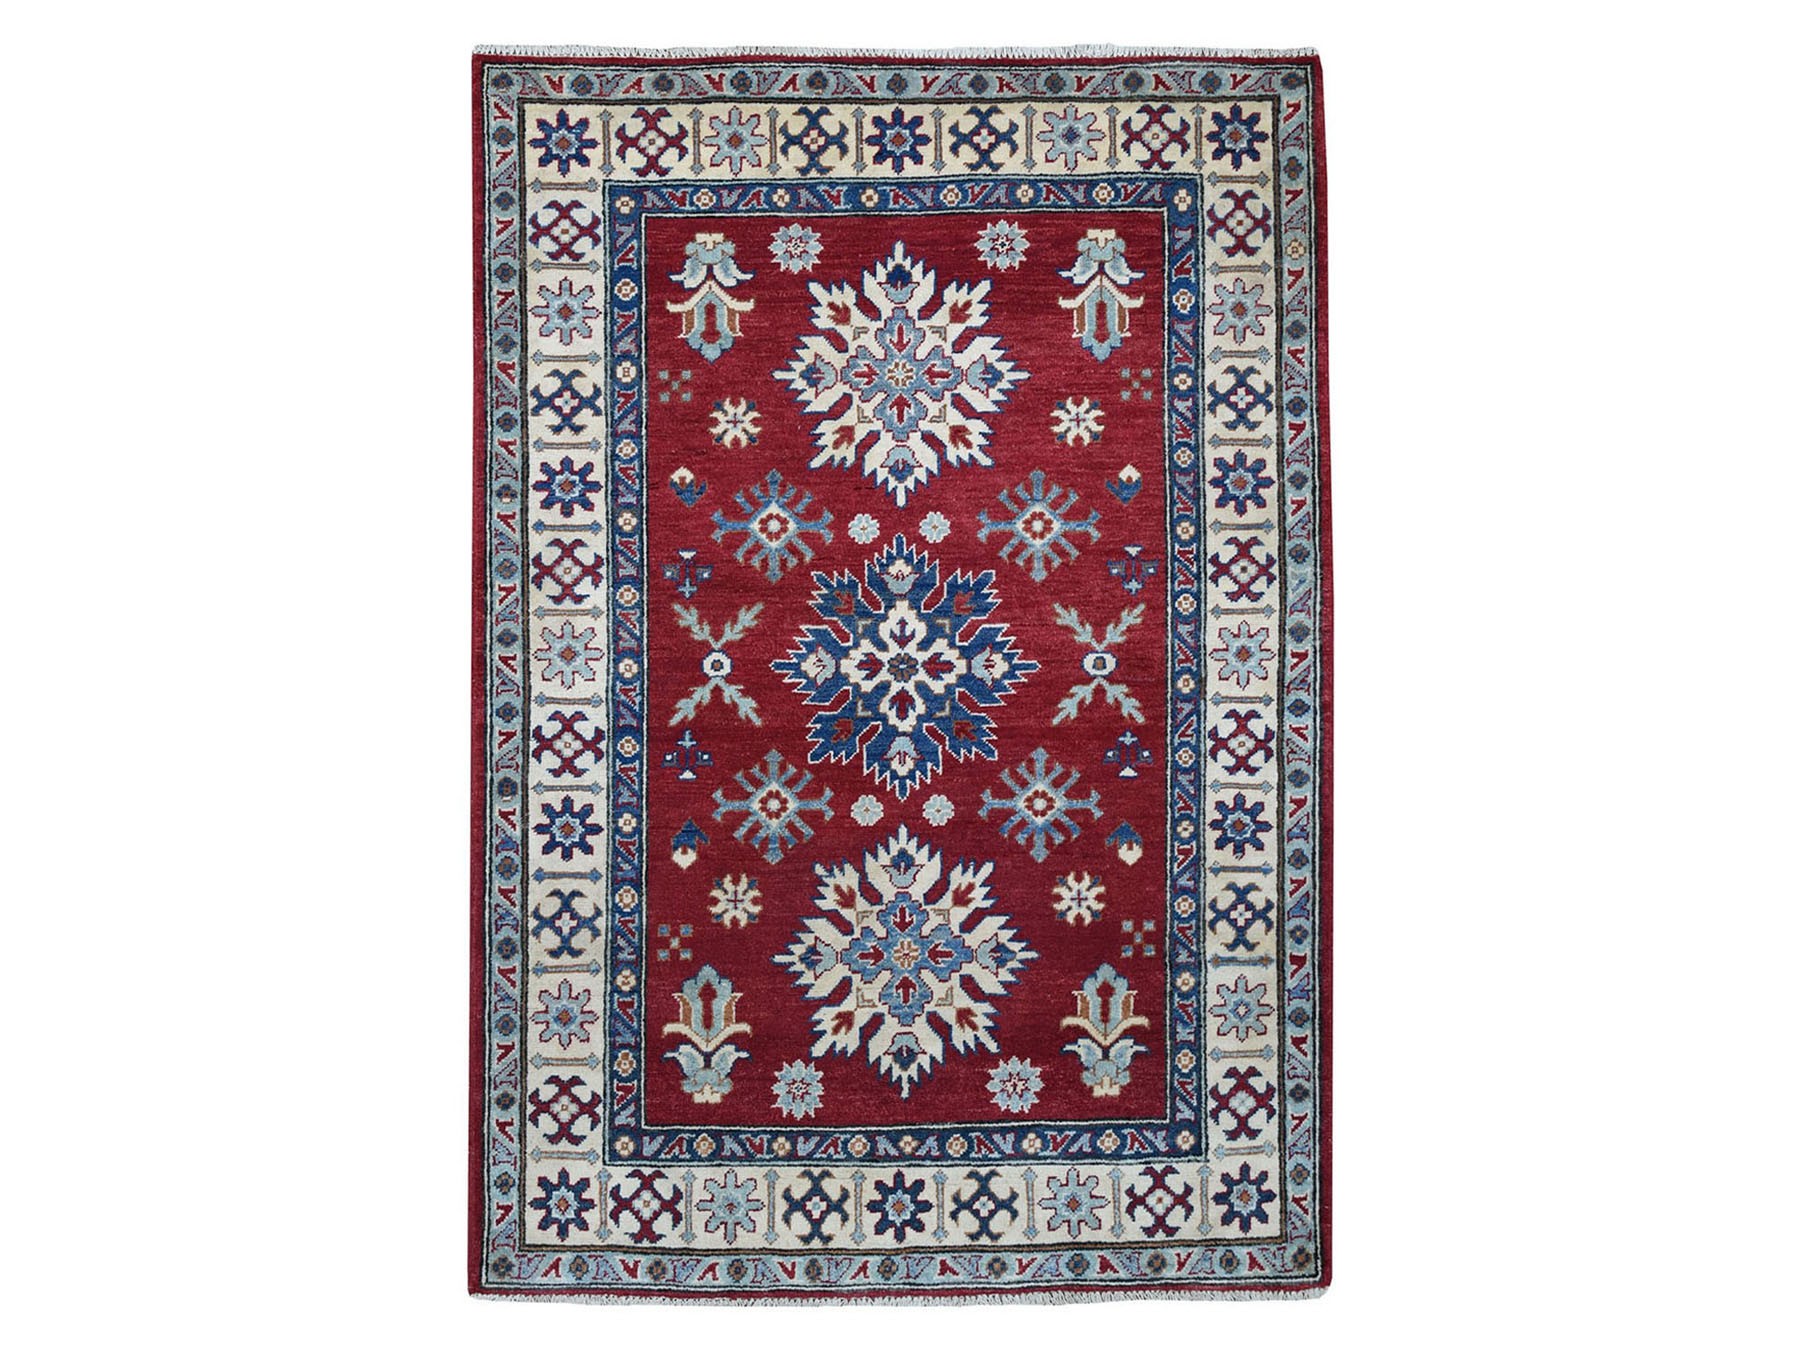 4'X5'10" Red Geometric Design Kazak Pure Wool Hand-Knotted Oriental Rug moaeaacd